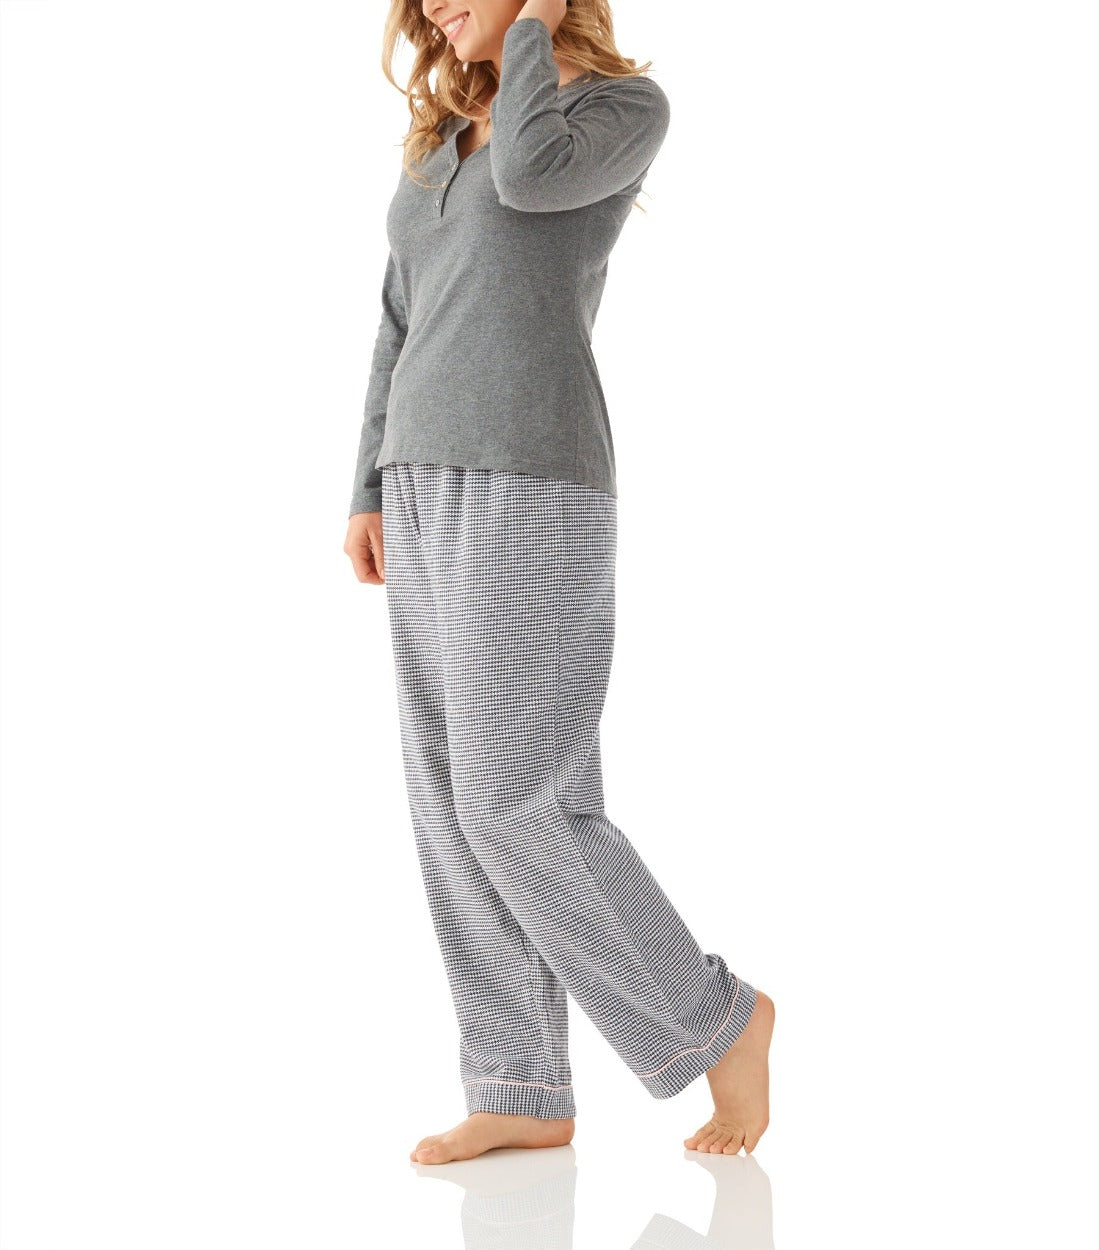 Ava Houndstooth Flannelette Cotton Pyjama Pants